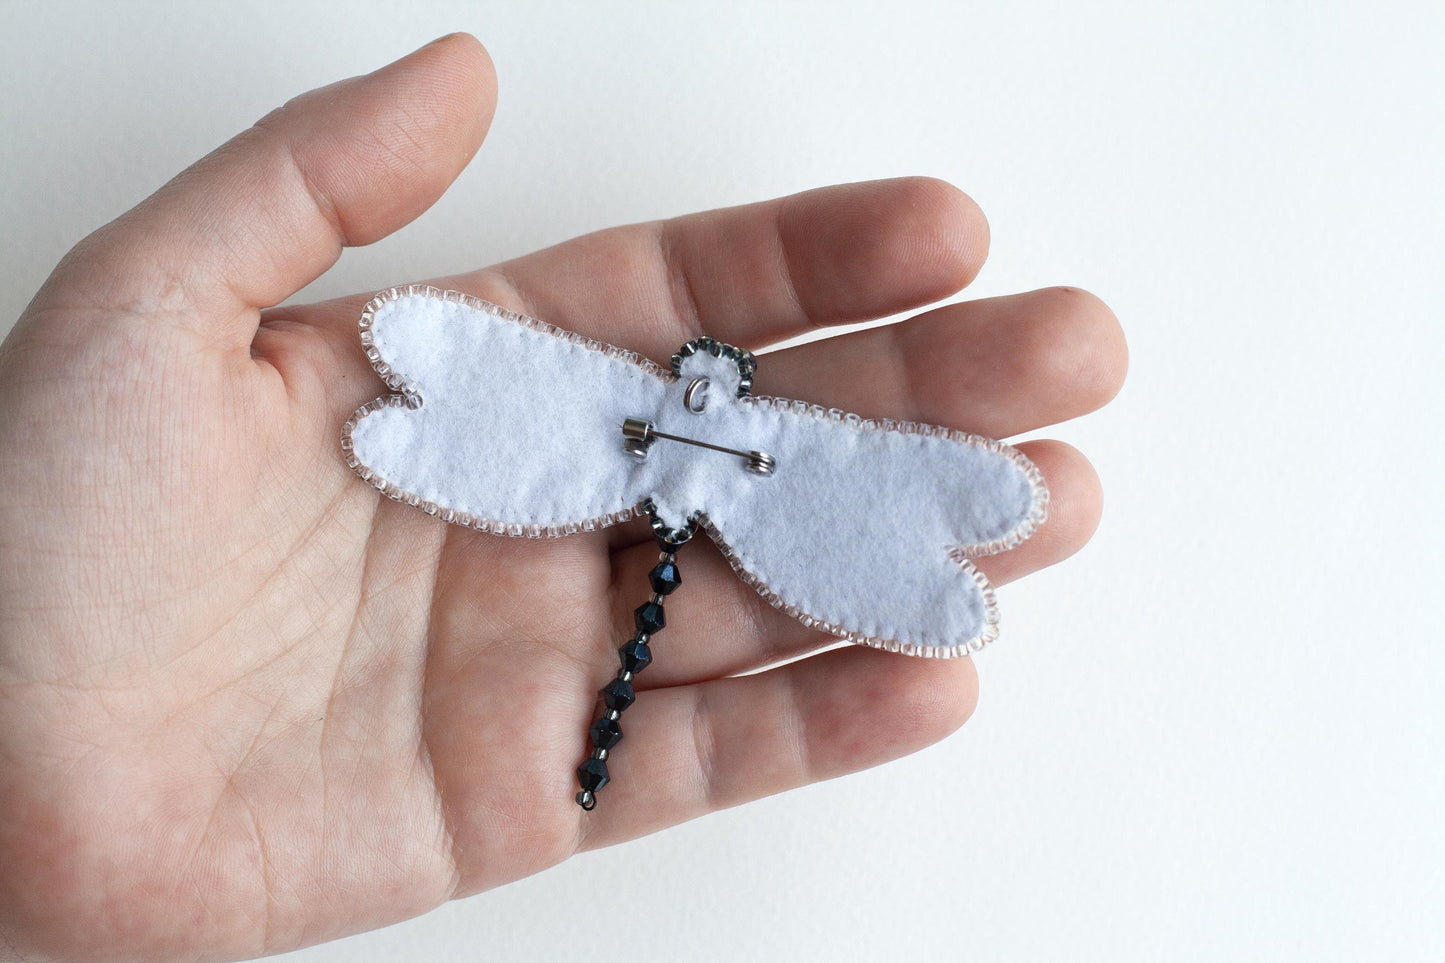 Dragonfly Bead embroidery kit. Seed Bead Brooch kit. DIY Craft kit. Beading kit. Needlework beading. Handmade Jewelry Making Kit